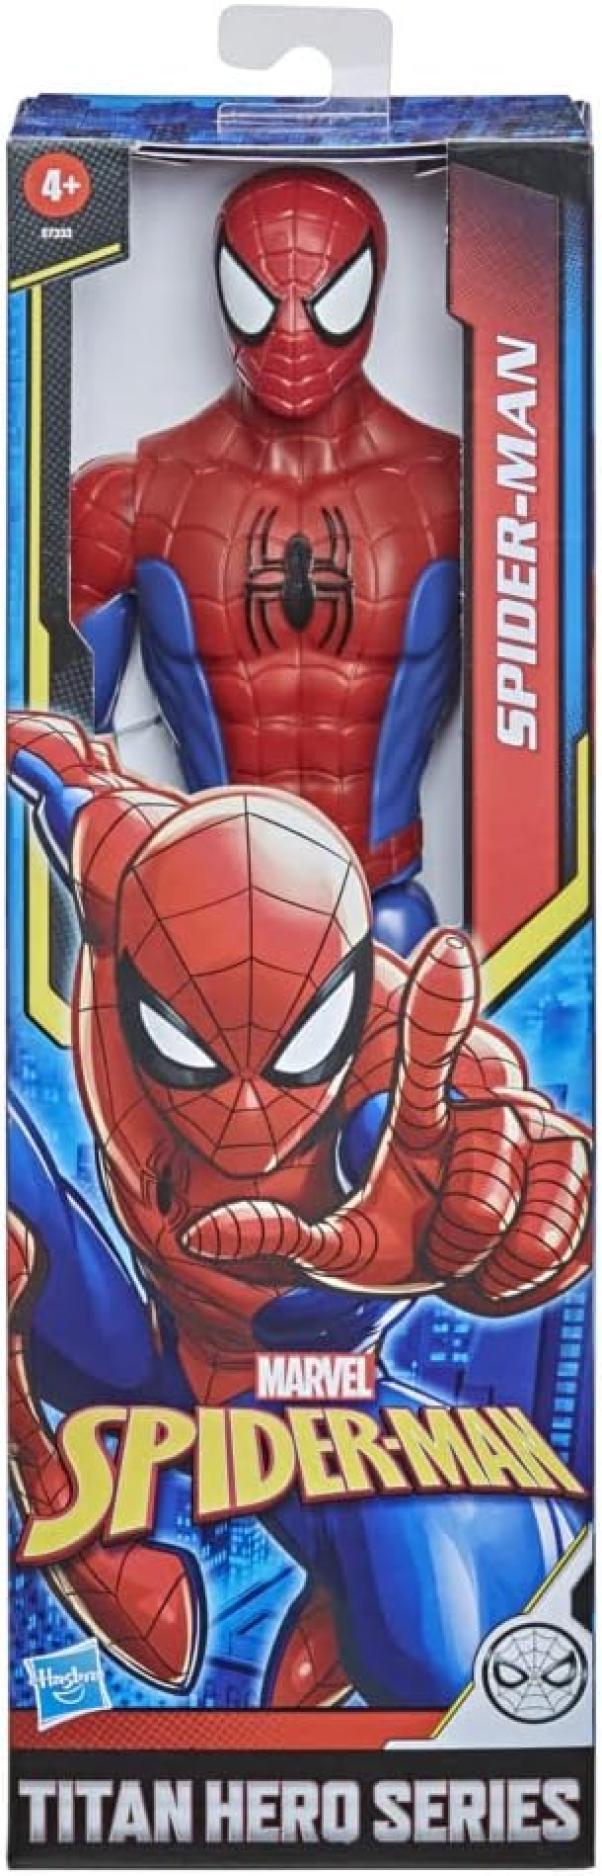 hasbro action figure spiderman titan hero series